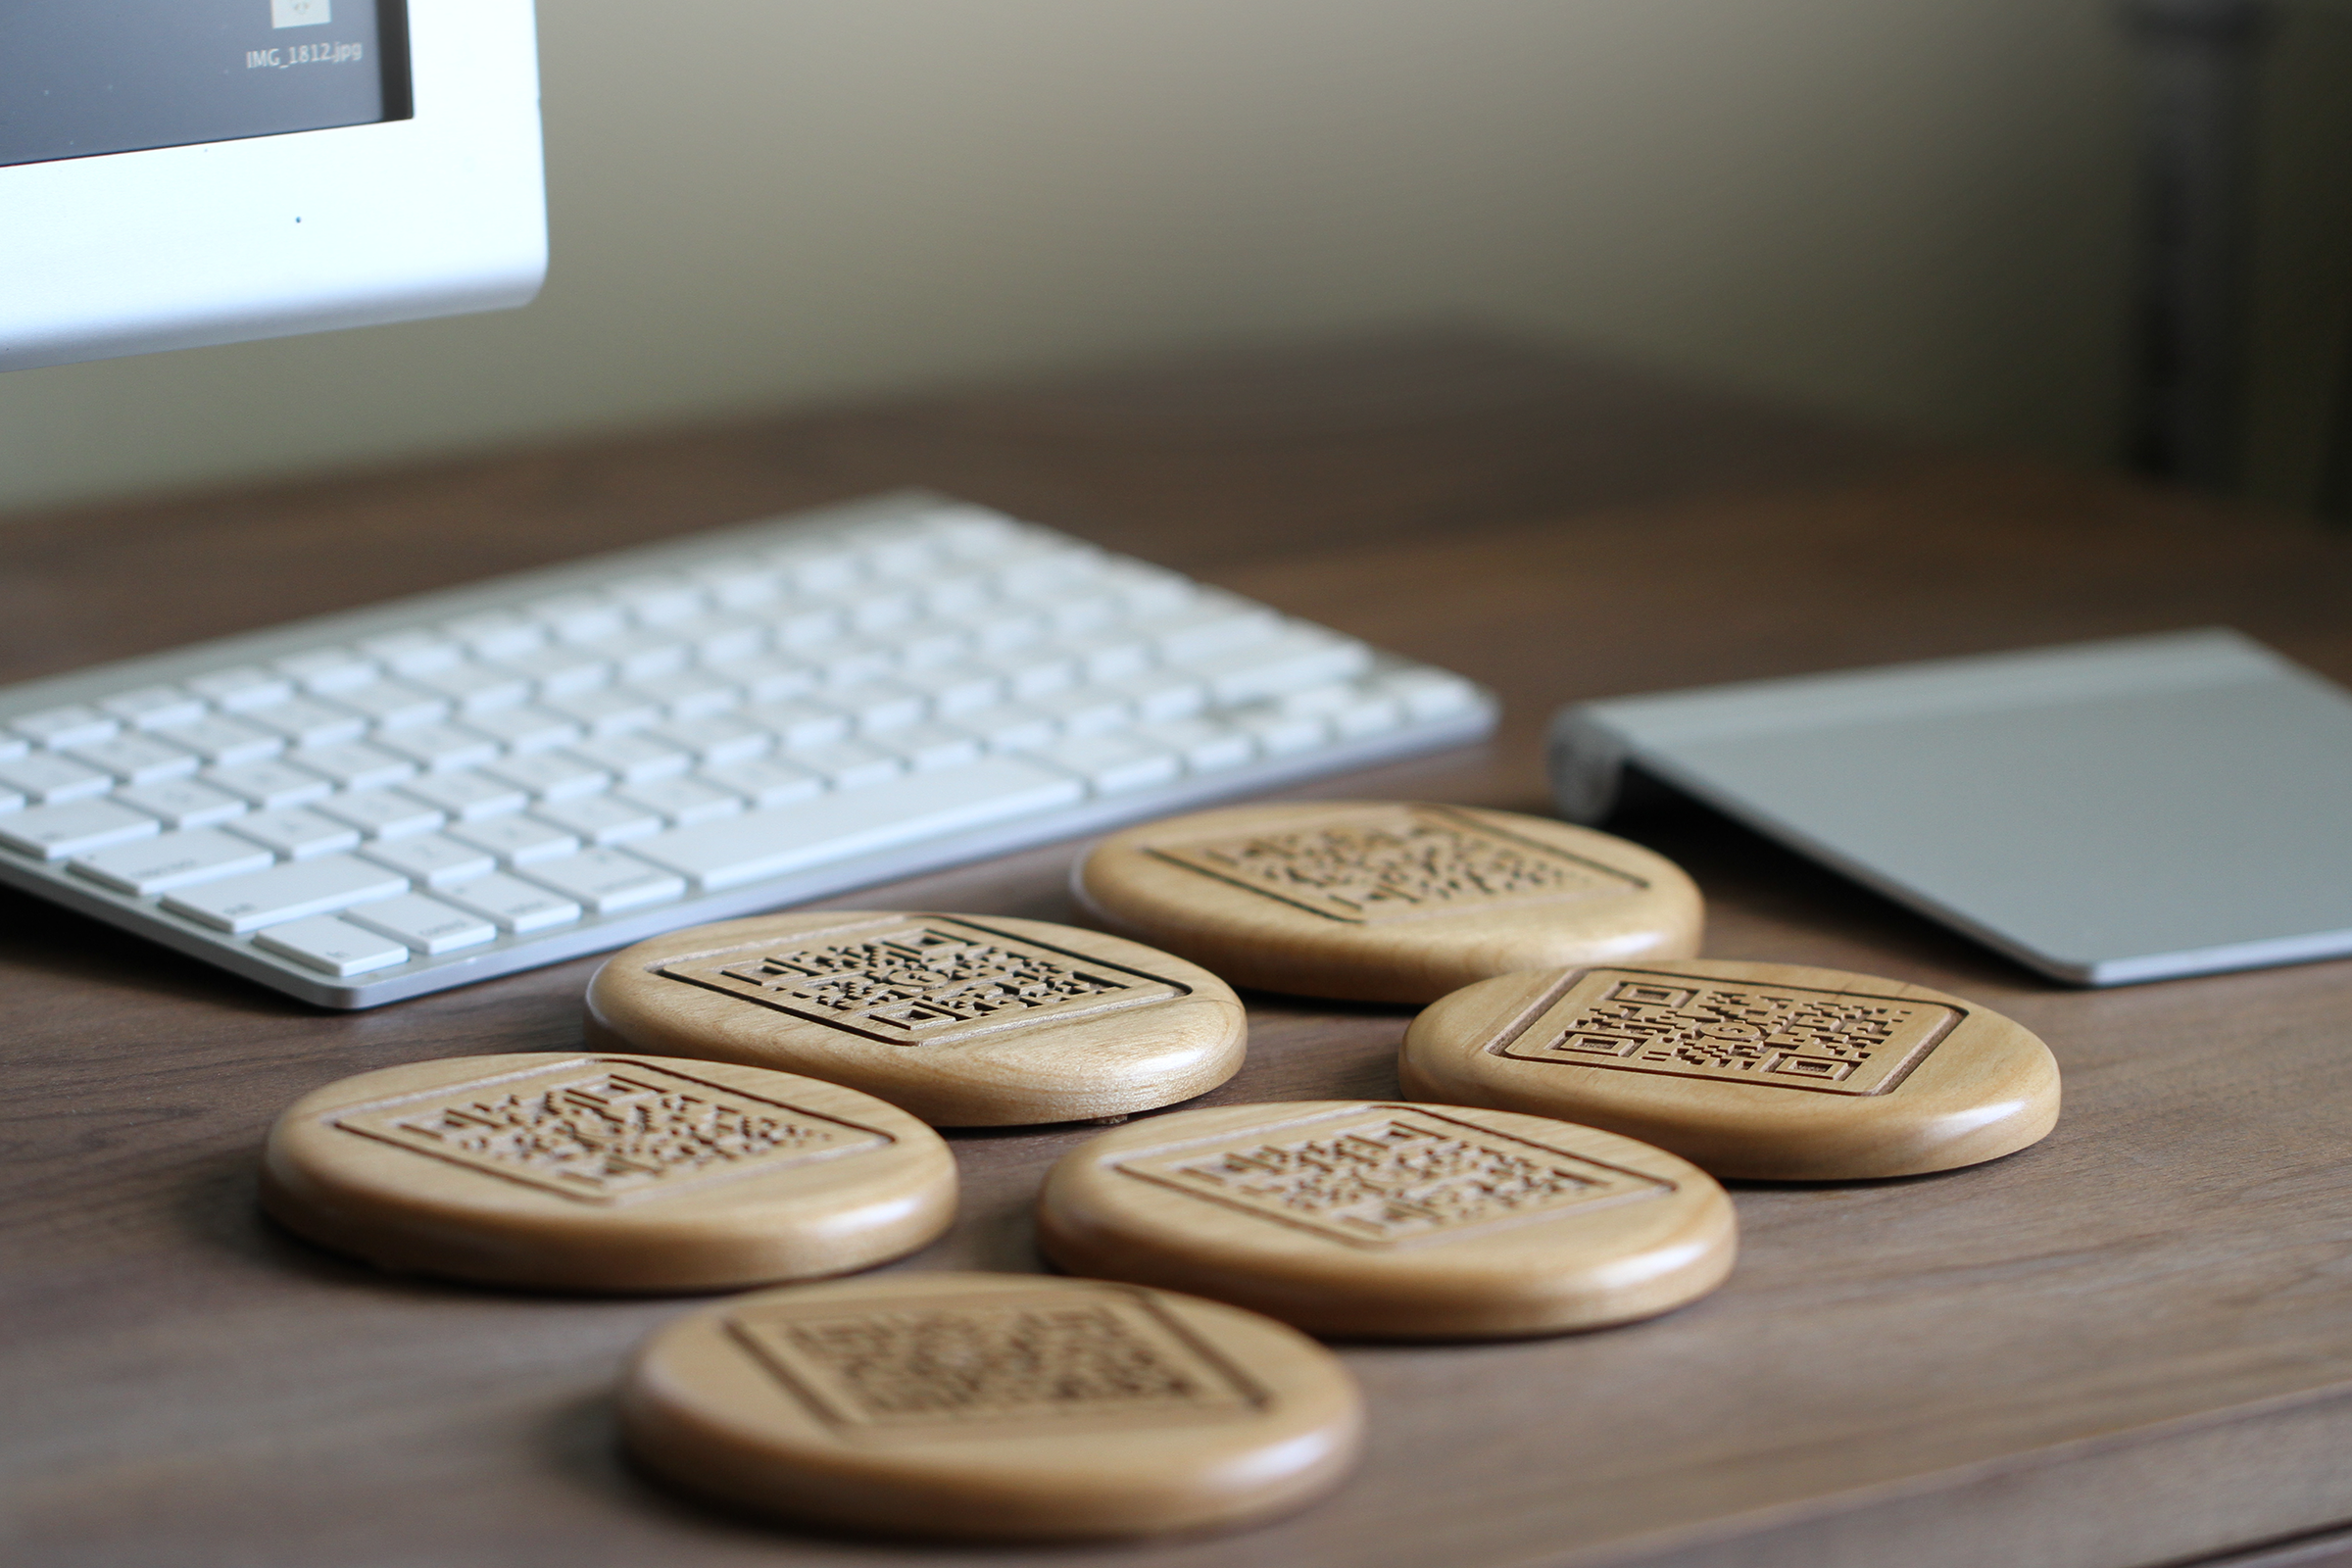 Custom Qr Code Wooden Coasters Made By Tinkering Monkey Garrett Gee